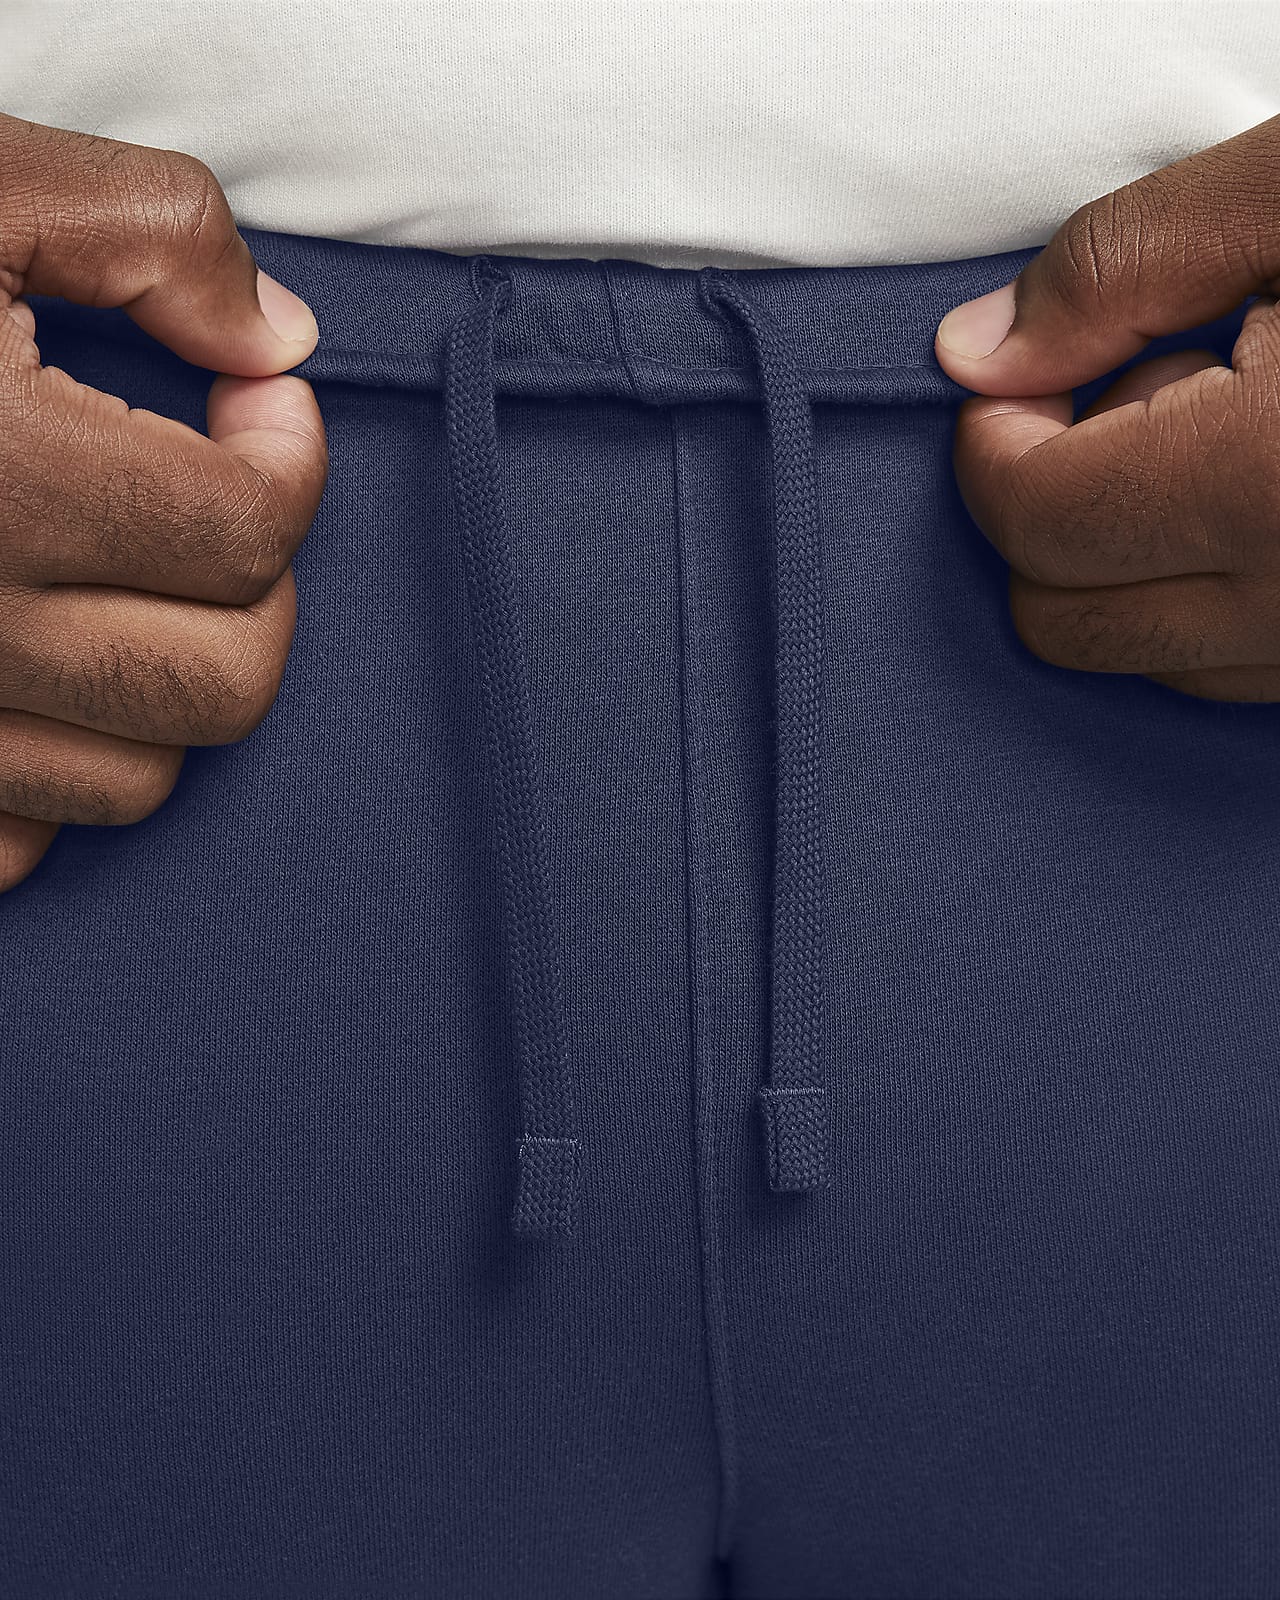 Nike Sportswear Tapered Trousers in Cream